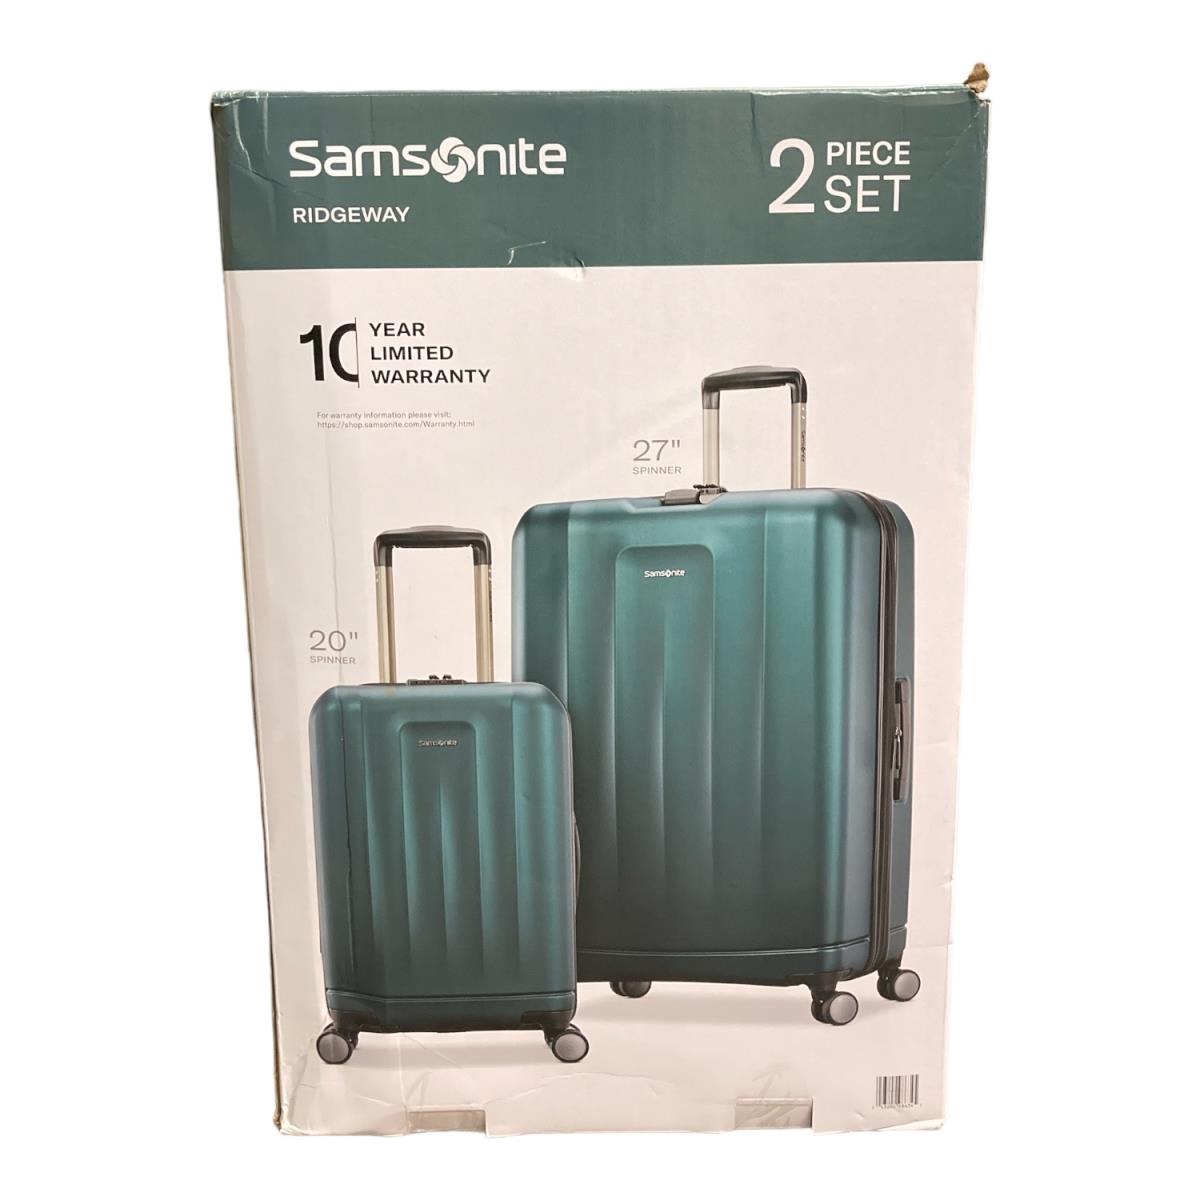 Samsonite Ridgeway Hardside 2-Piece Spinner Luggage Set Emerald Green